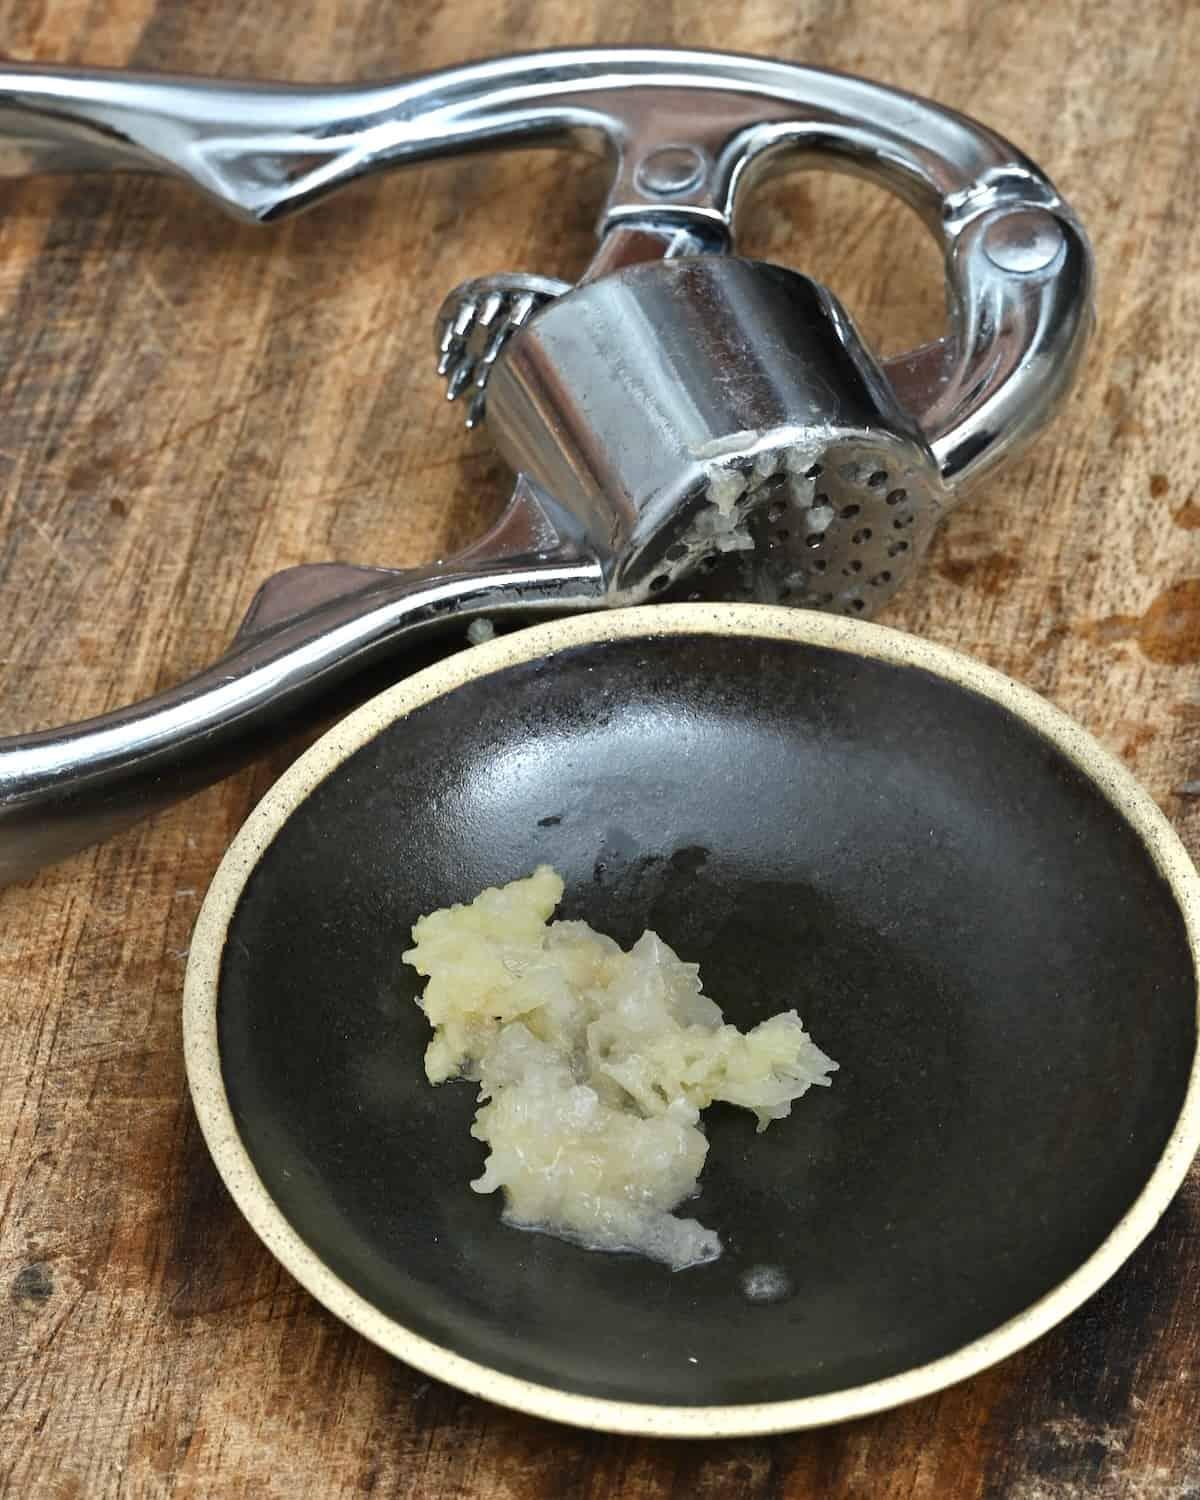 Minced garlic clove on a small plate